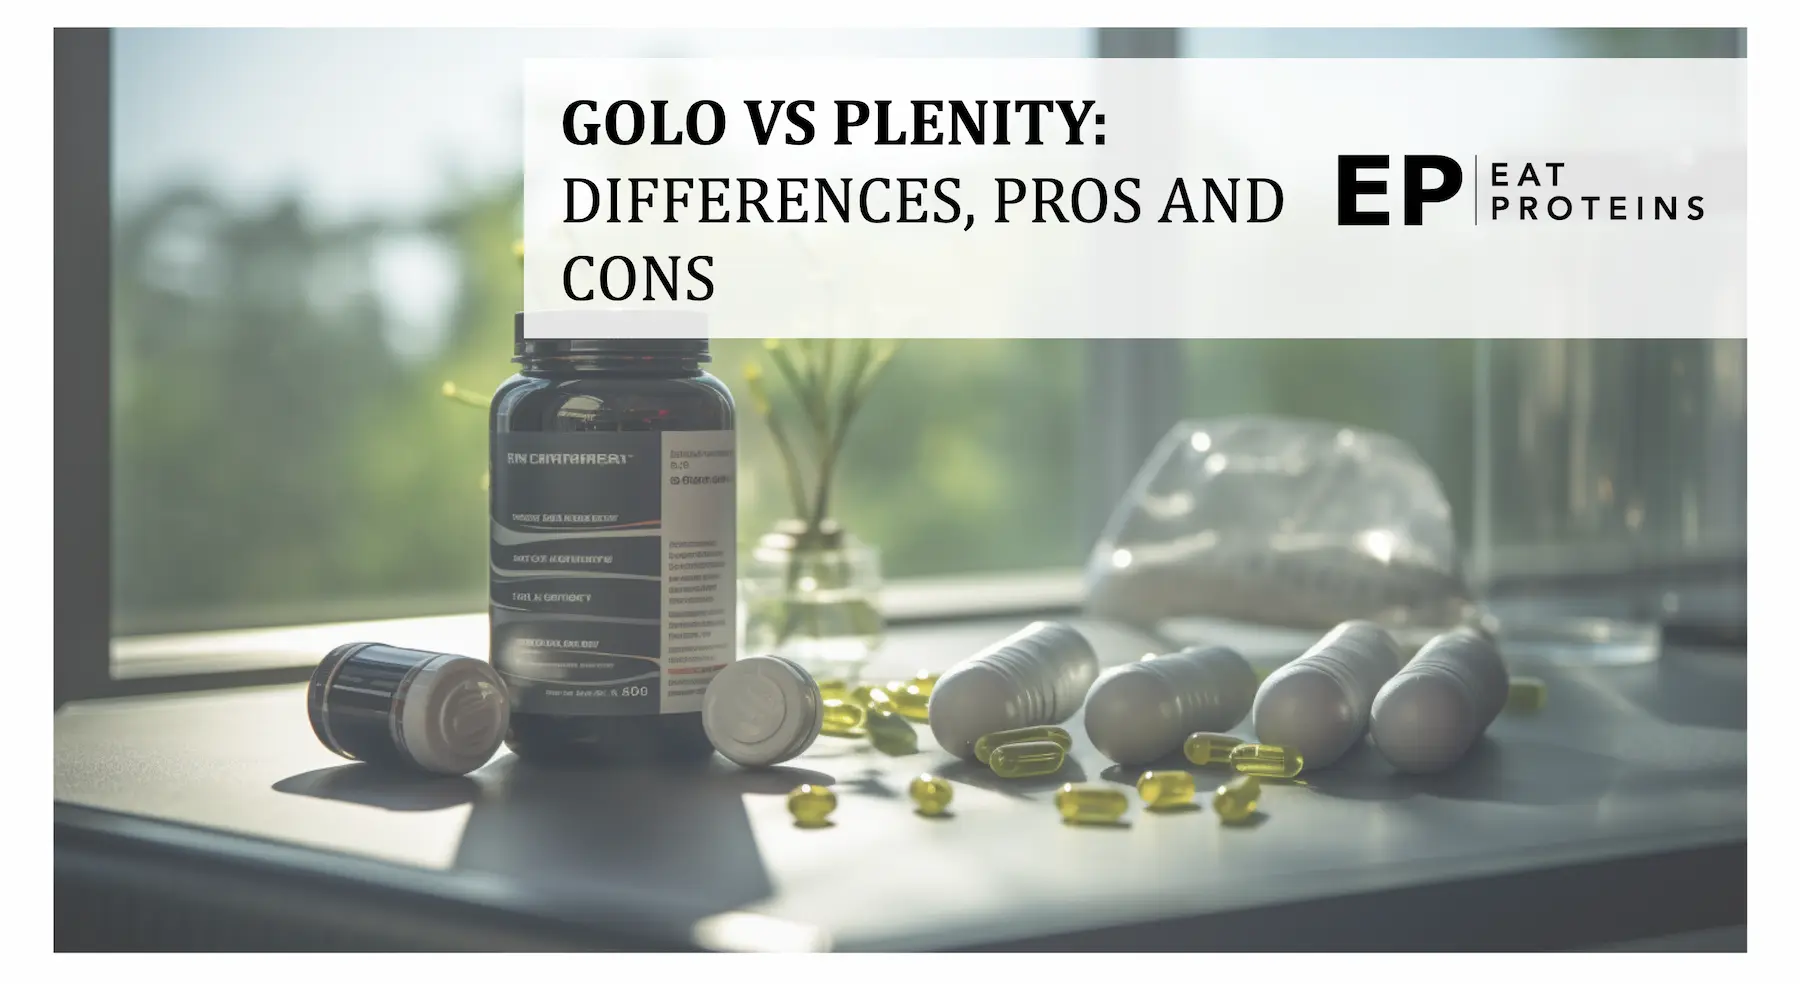 Plenity vs GOLO diet